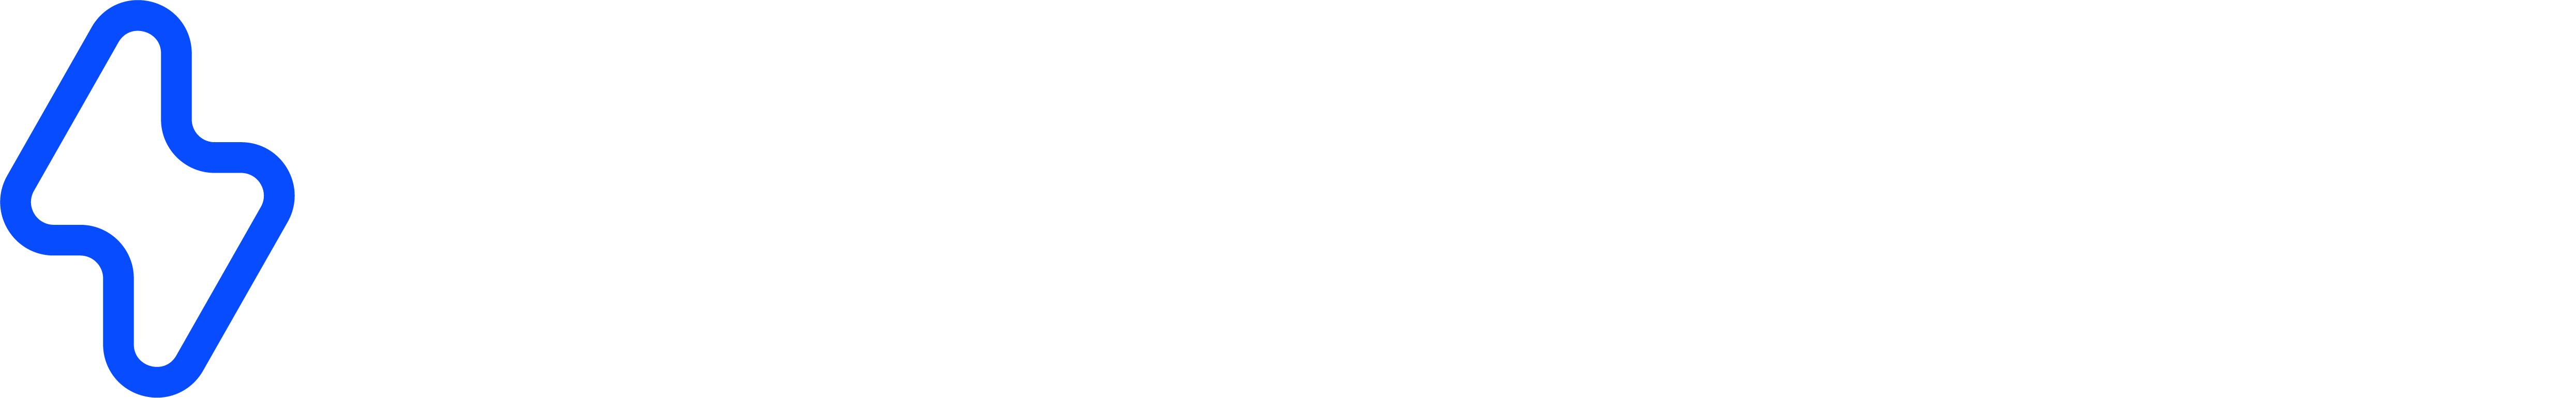 PF-logo-primary-fullcolor-white